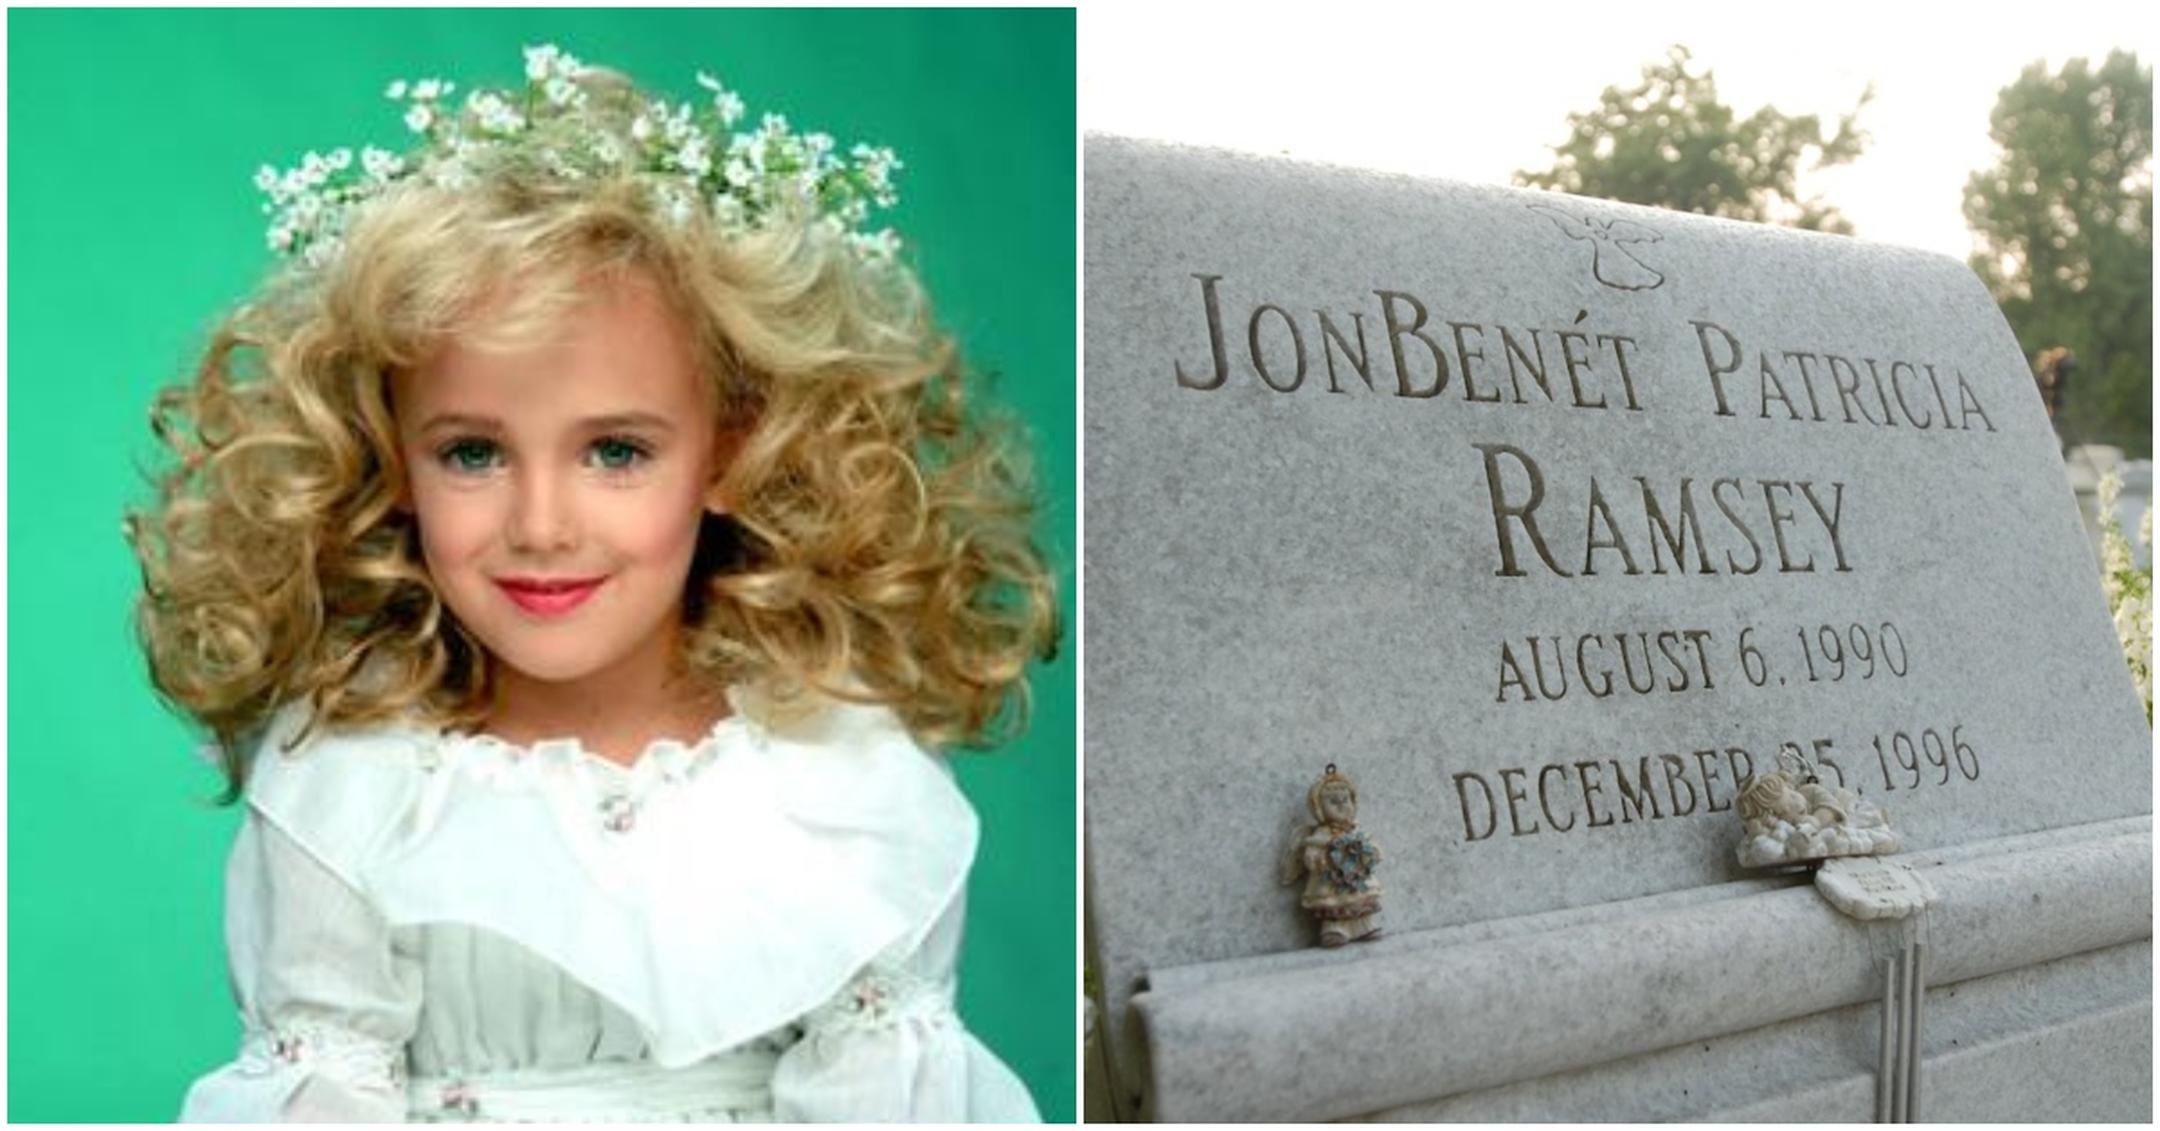 child beauty pageants - Jonbent Patricia Ramsey August 6.1990 December 35.1996